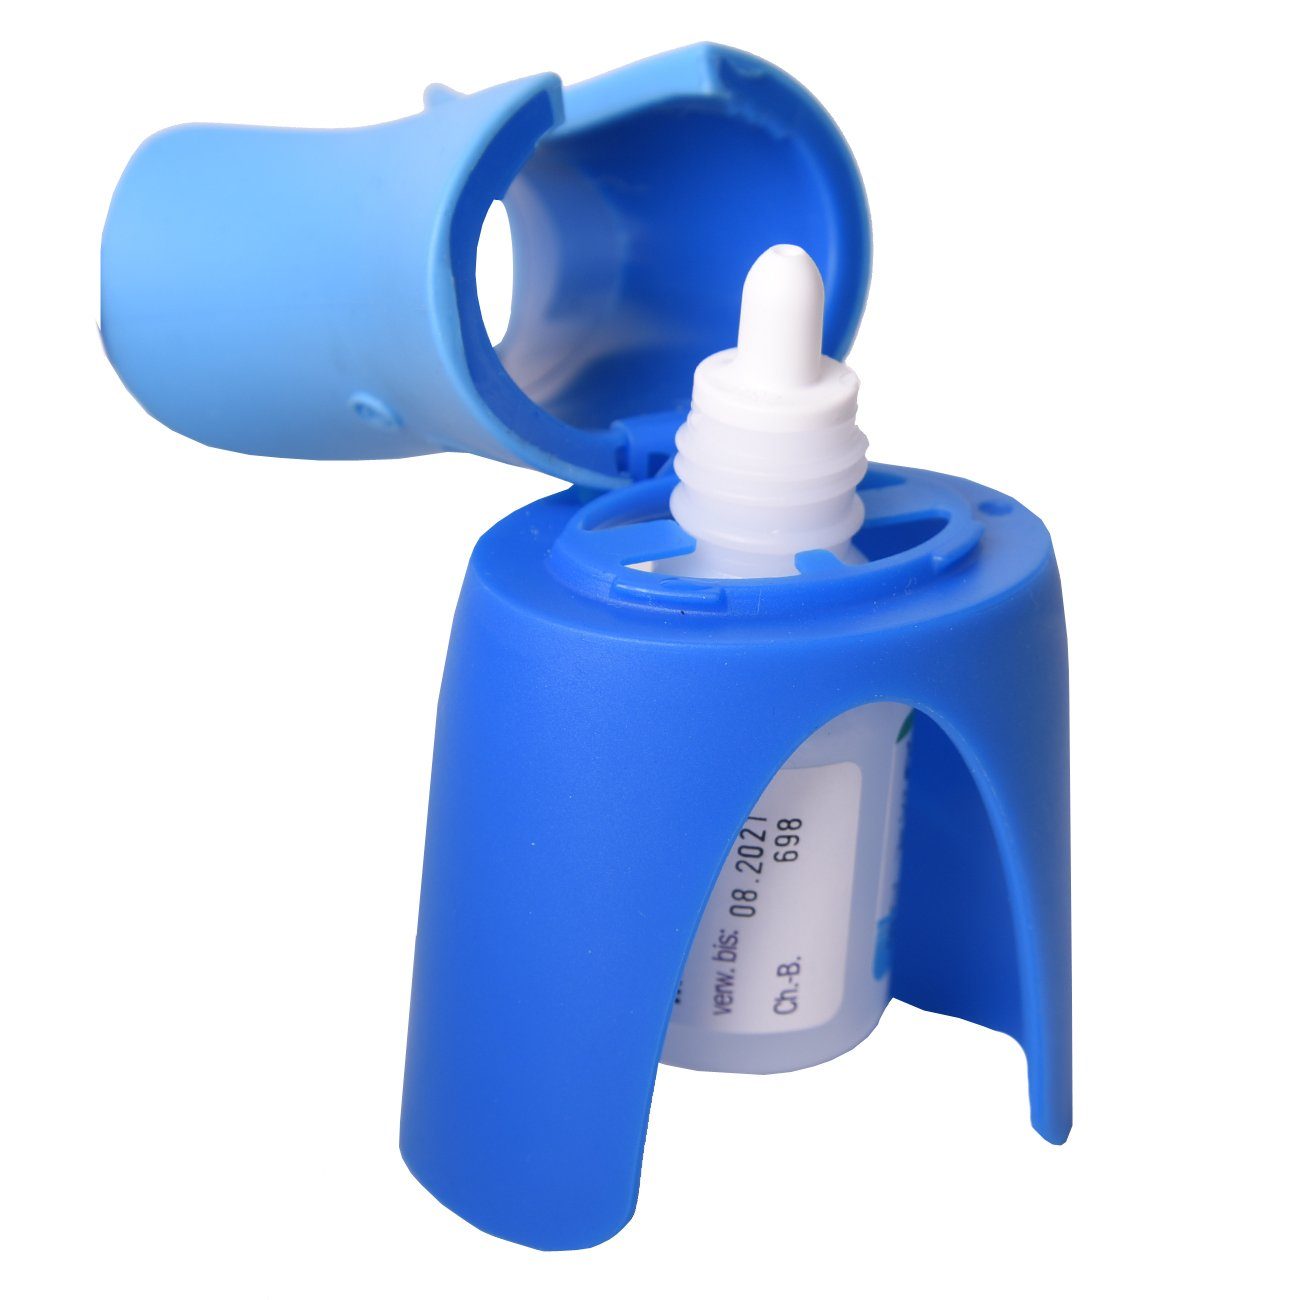 Augentropfen-Hilfe Augenpflege-Set Premium Remedic Blau Applikationshelfer